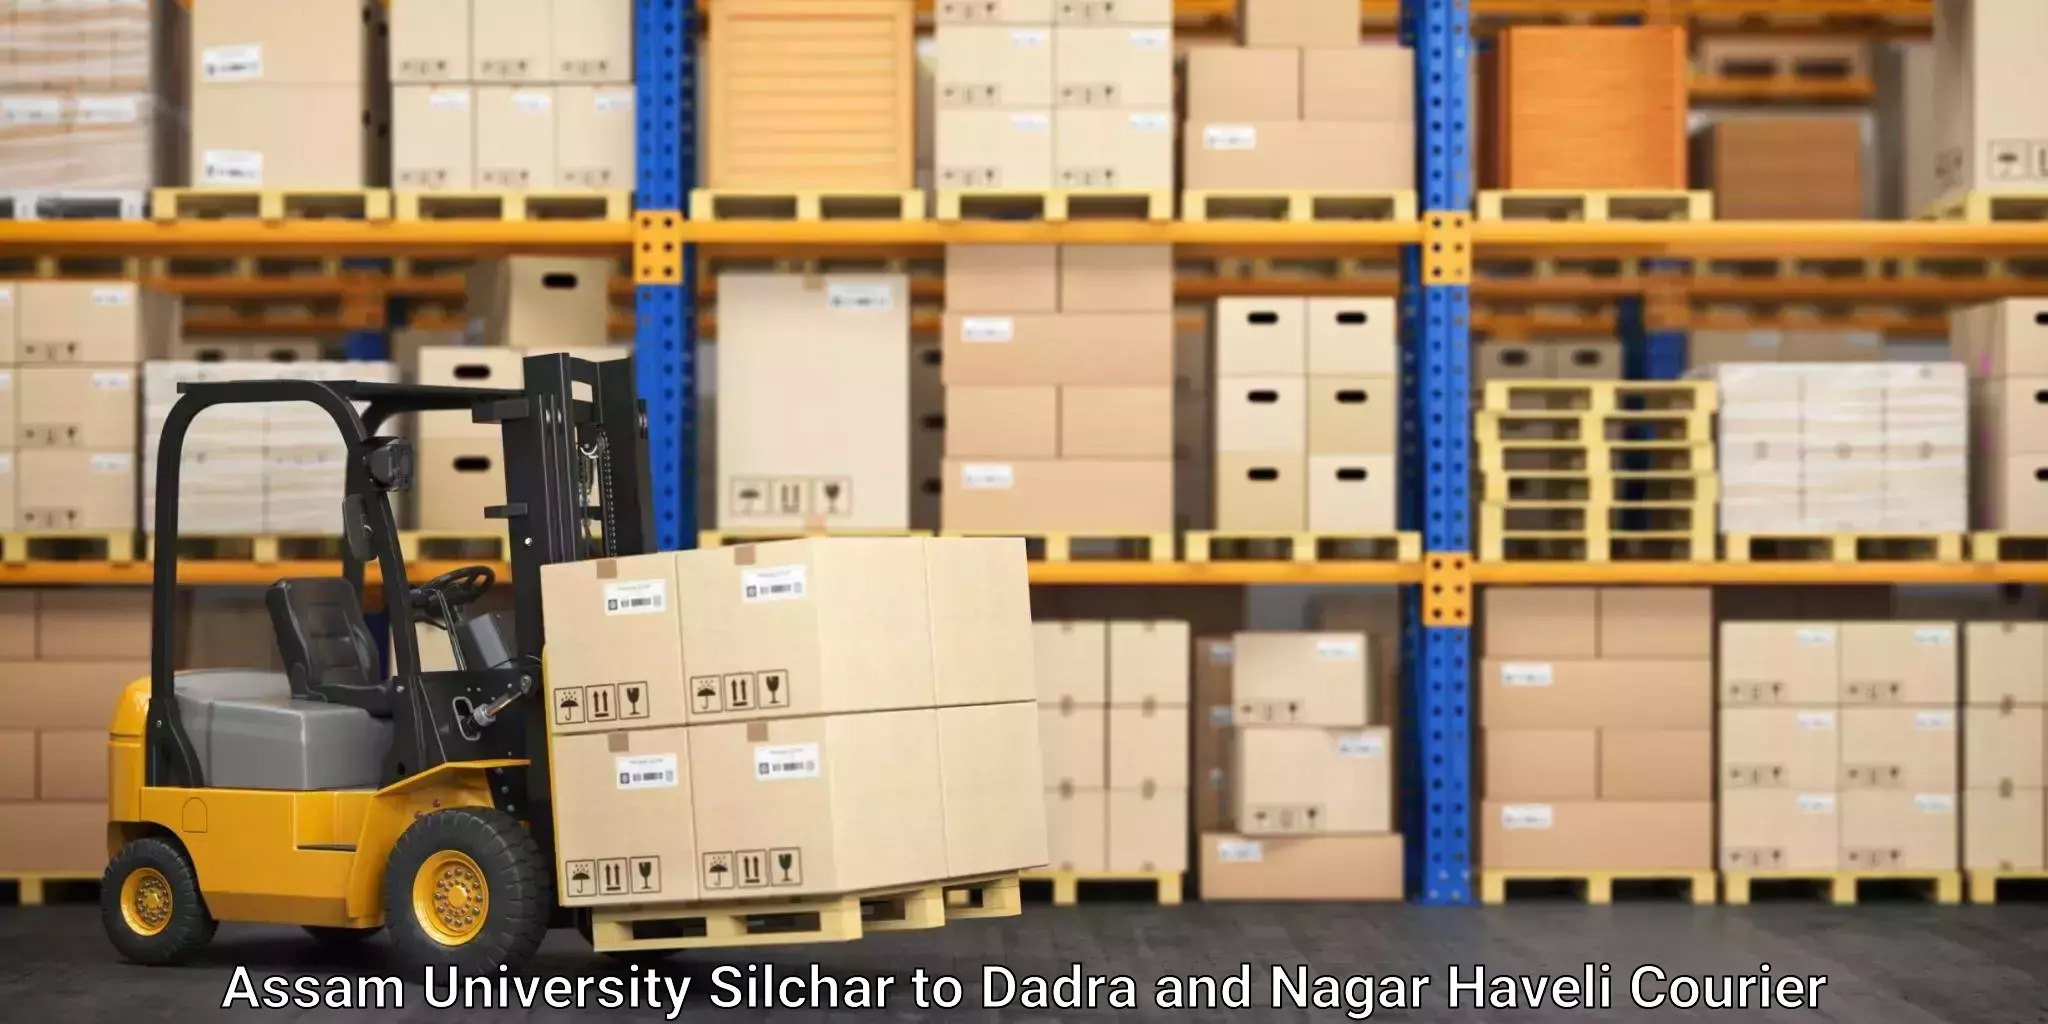 Doorstep delivery service Assam University Silchar to Silvassa